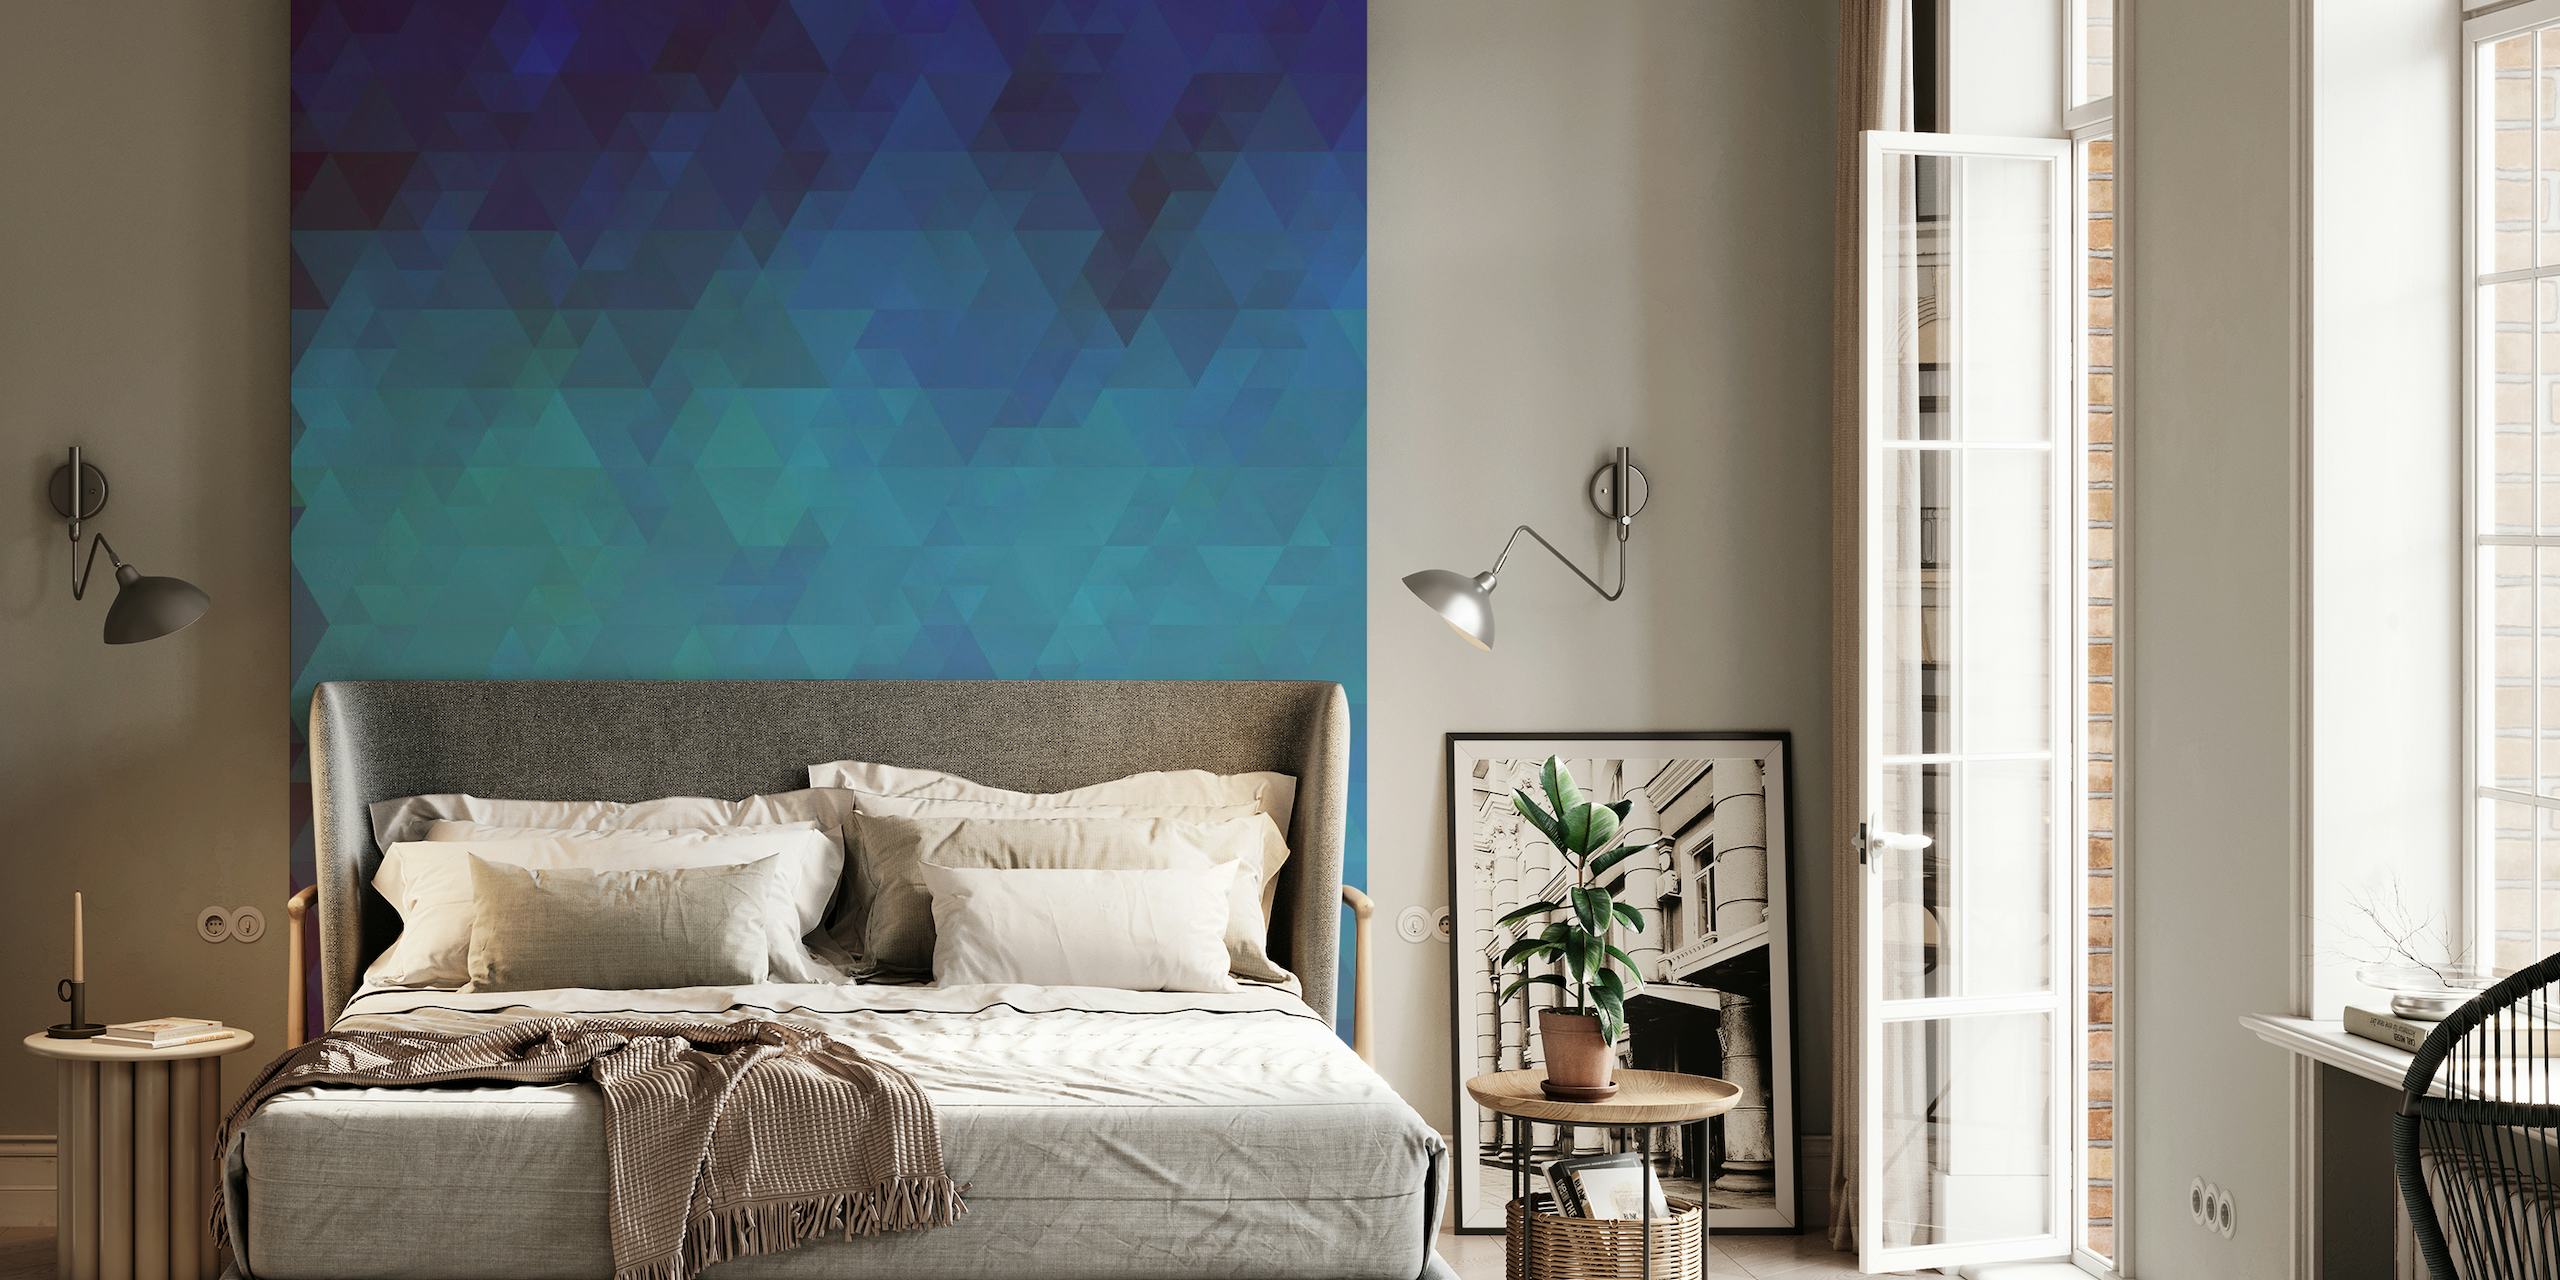 Geometric blue triangle pattern wall mural